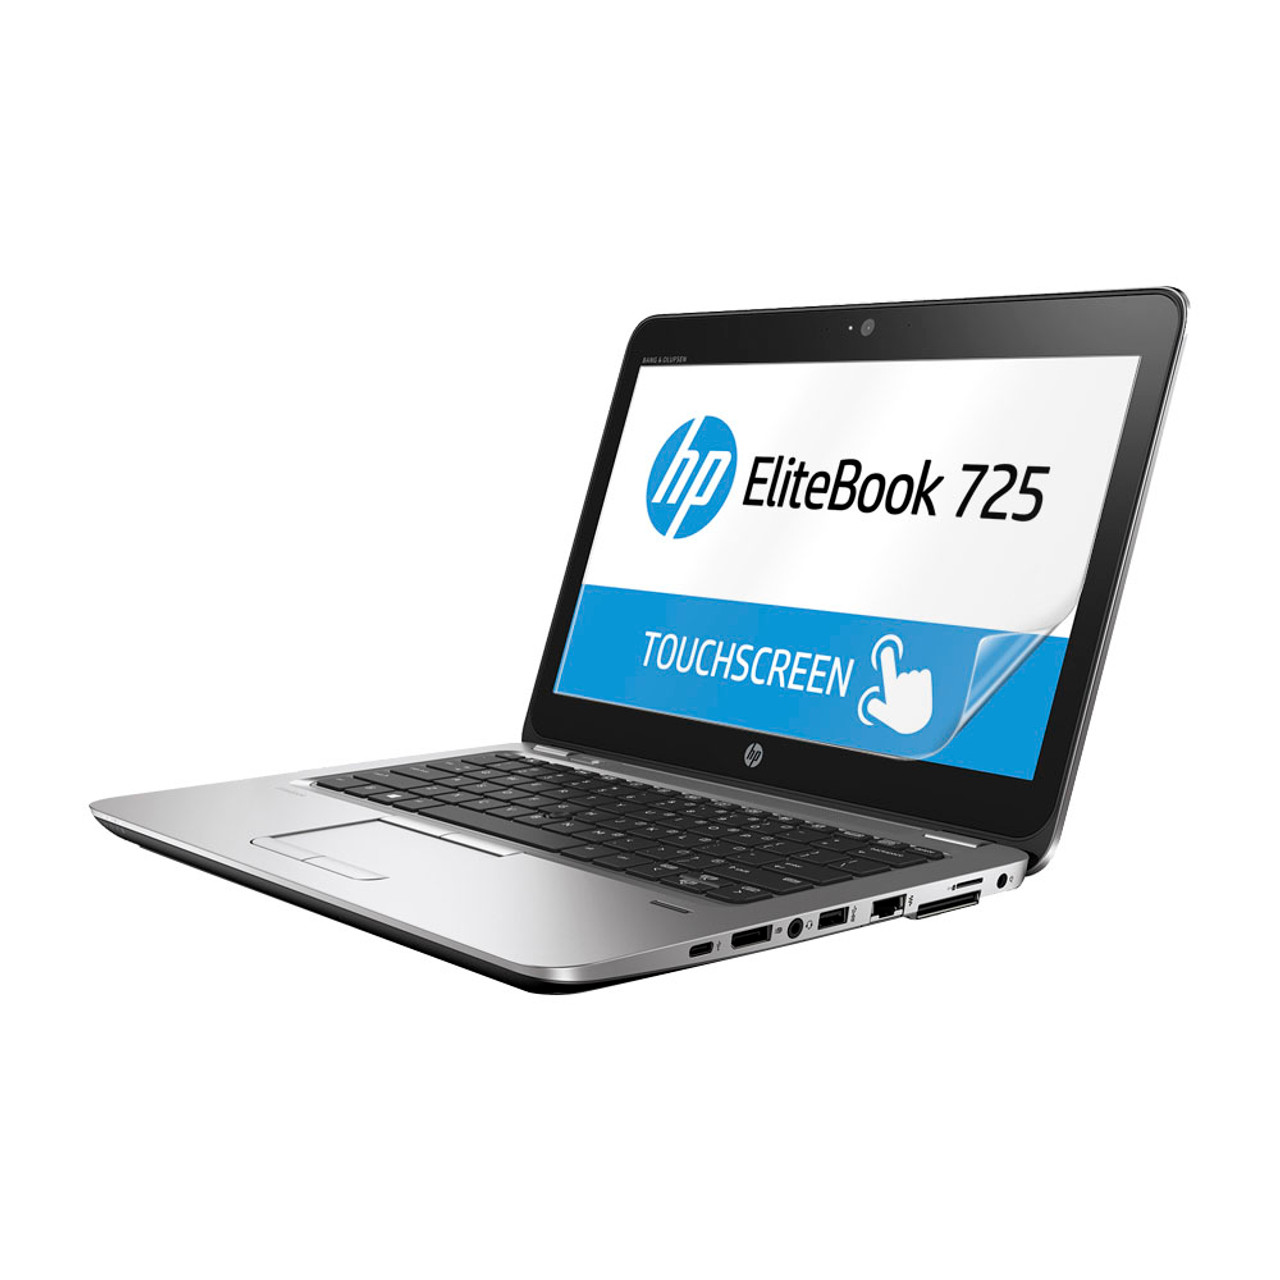 EliteBook 840 G3 Notebook PC